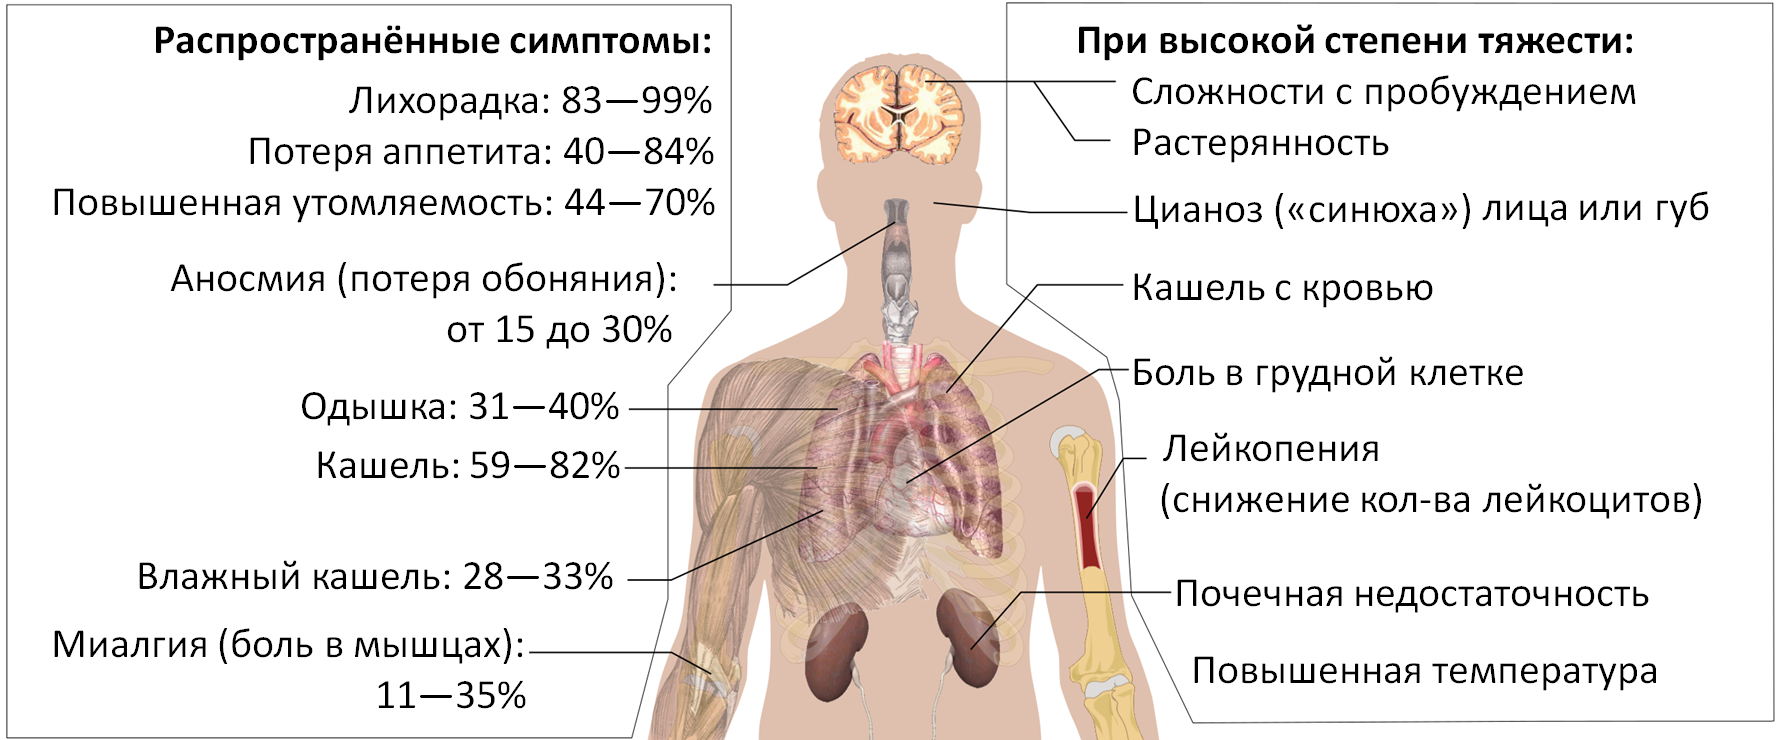 Symptoms of coronavirus disease 2019 4.0 ru